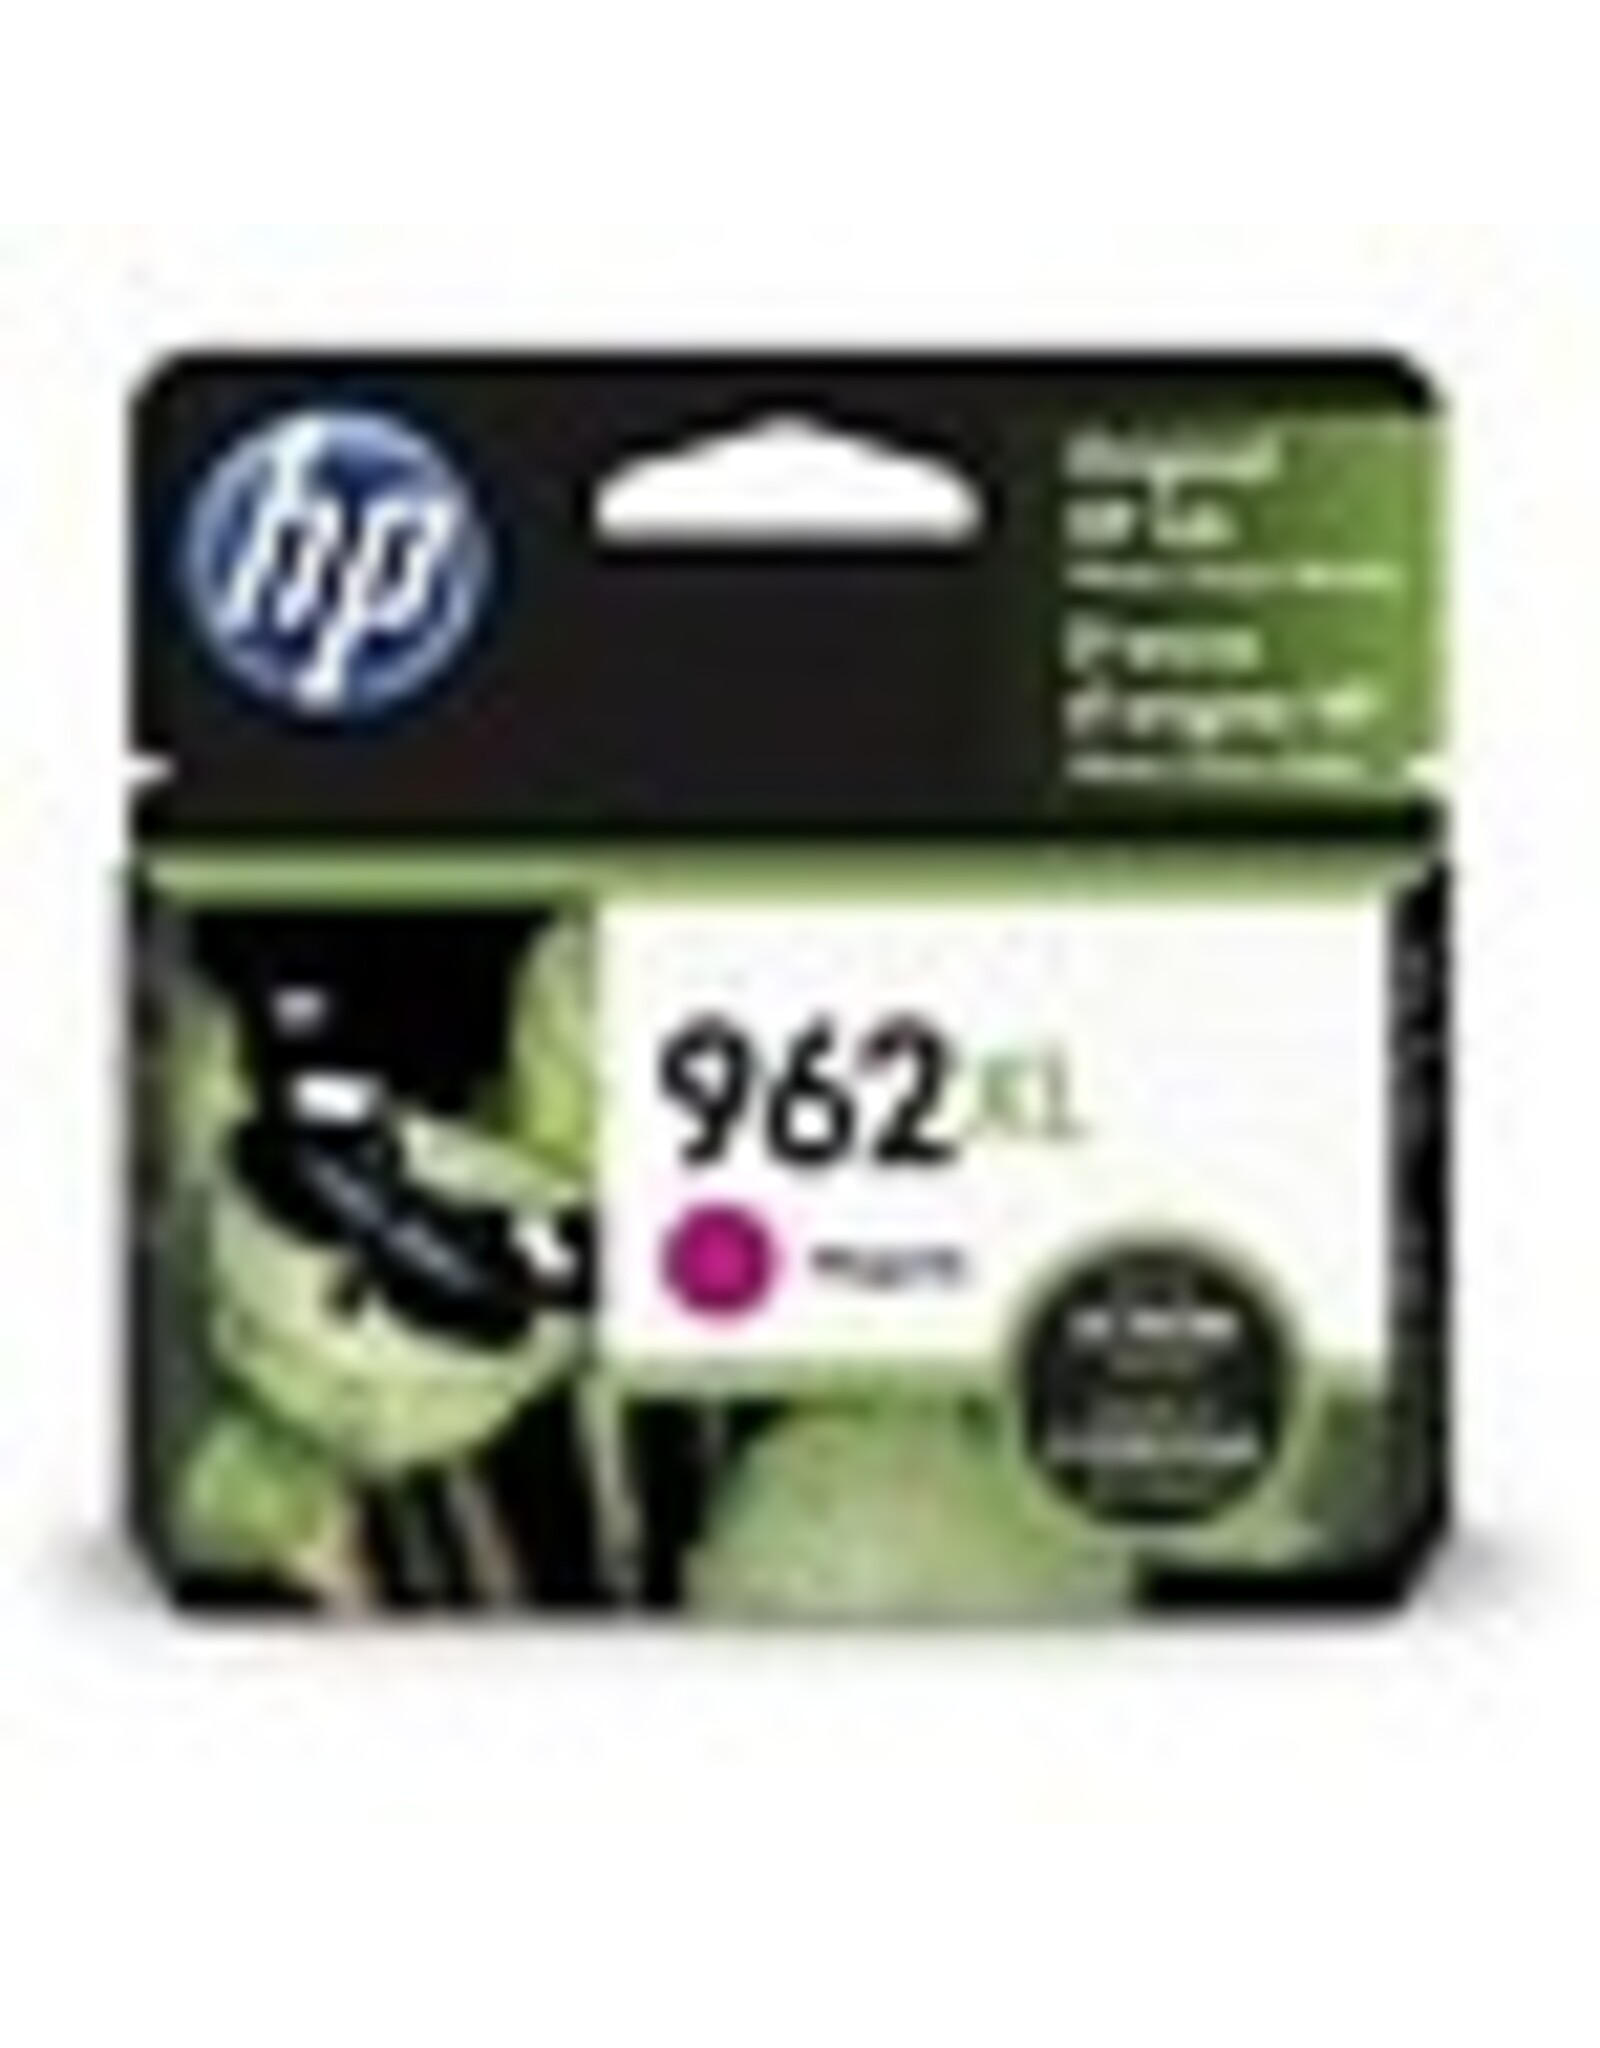 HP HP 962XL Ink Cartridge - Magenta